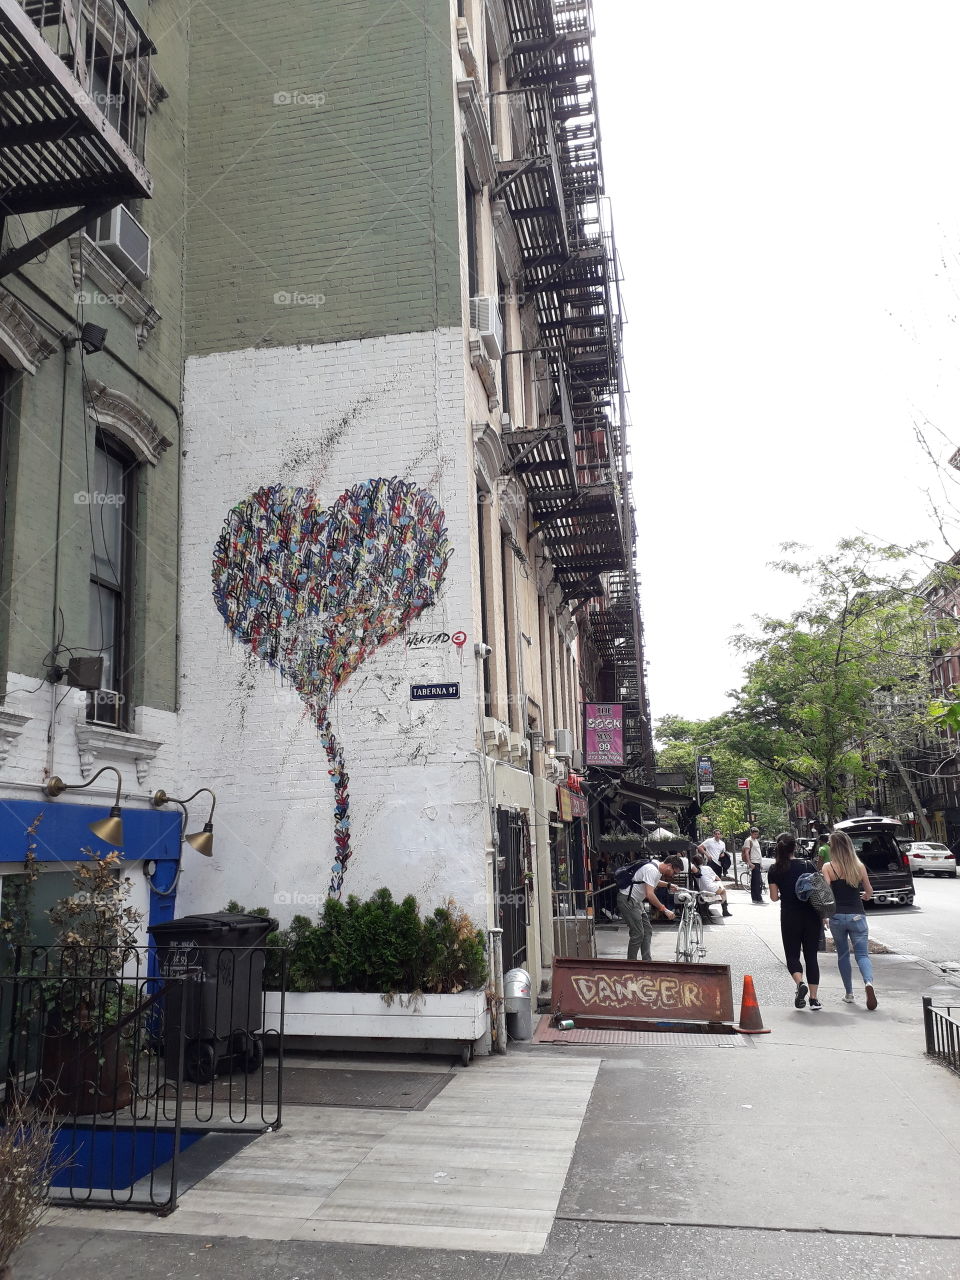 NYC - street art